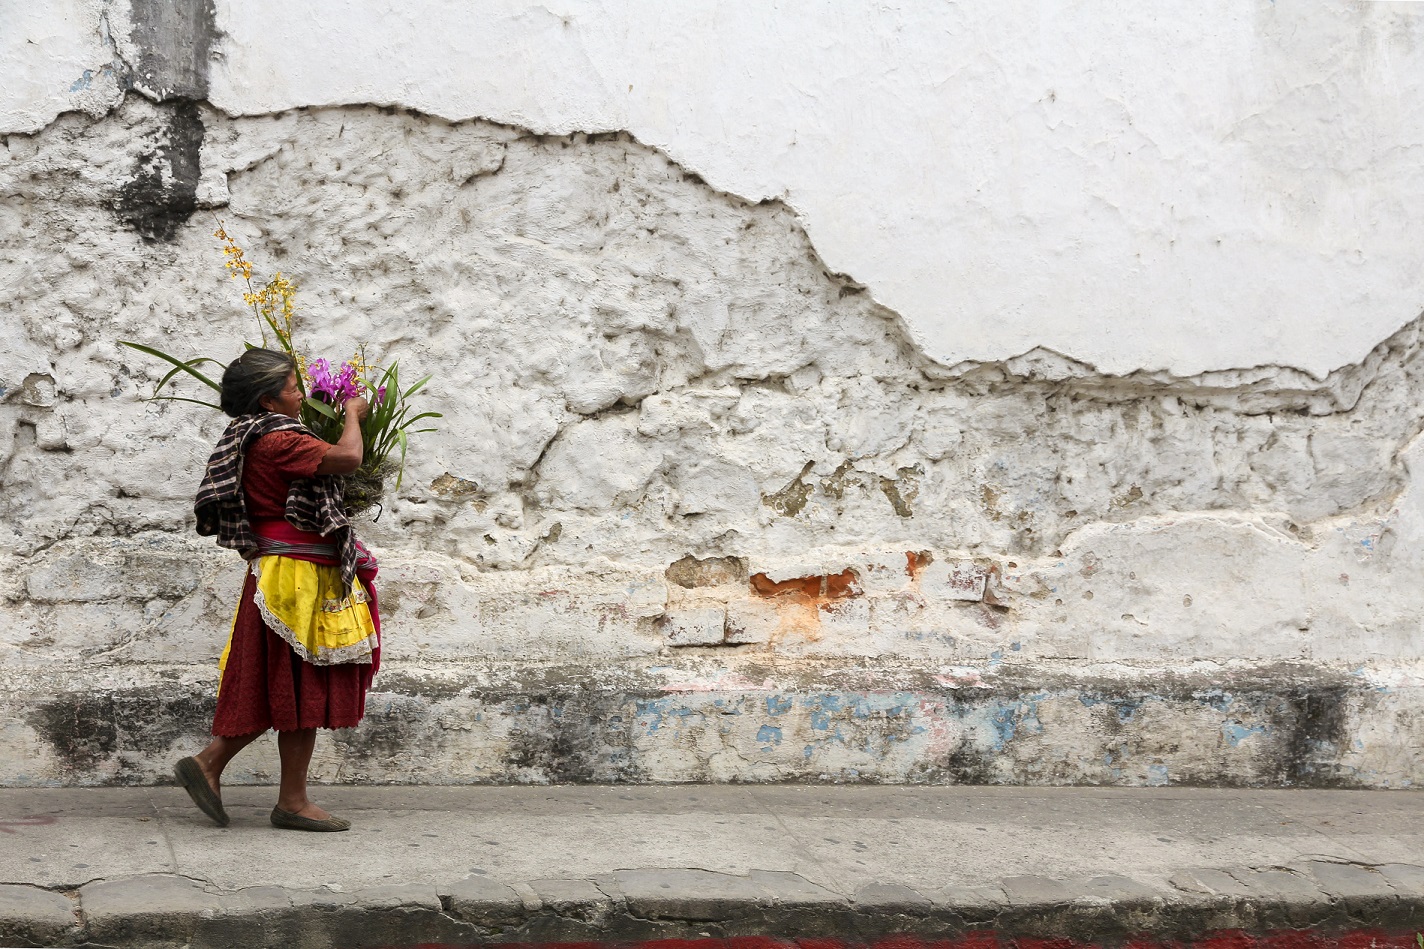 Woman walking near stucco. Photo by Scott Umstattd on Unsplash